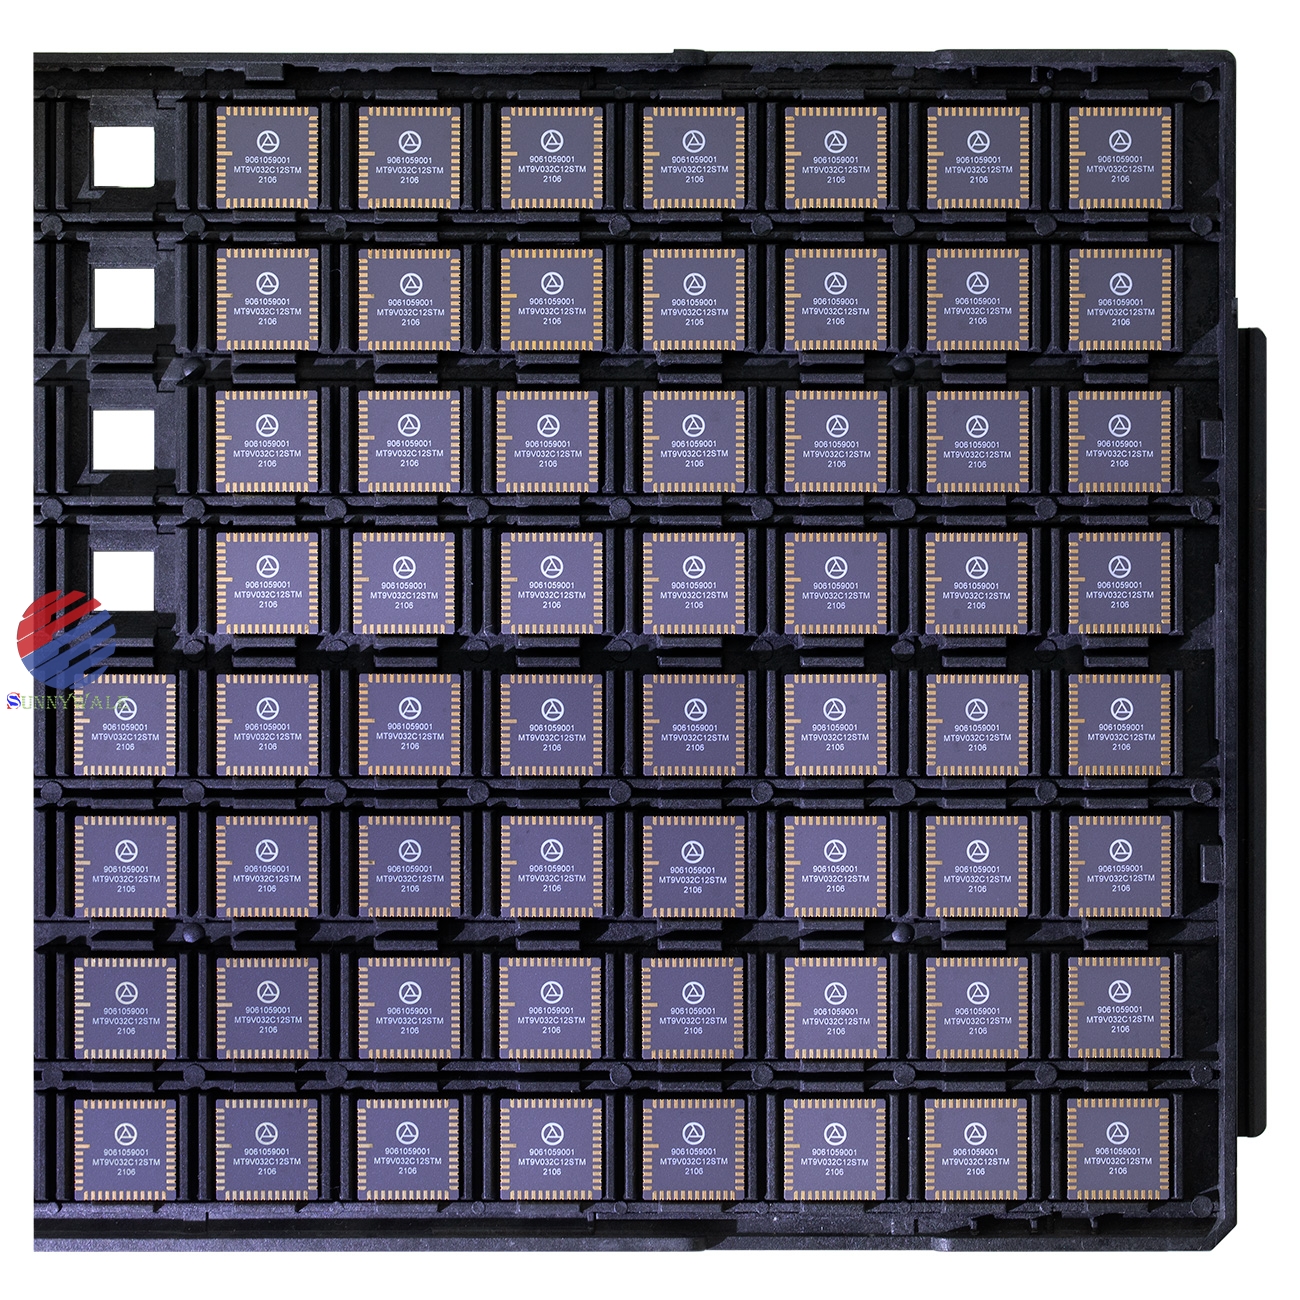 MT9V032C12STM (monochrome), MT9V032C12STC (color), Aptina ONSEMI VGA CMOS sensor, global shutter, for industrial cameras, visual machine cameras, security cmos cameras... Image cmos sensor, black and white monochrome image sensor, large pixel size 6x6μm,762x480px,1/3" 0.3M pixels